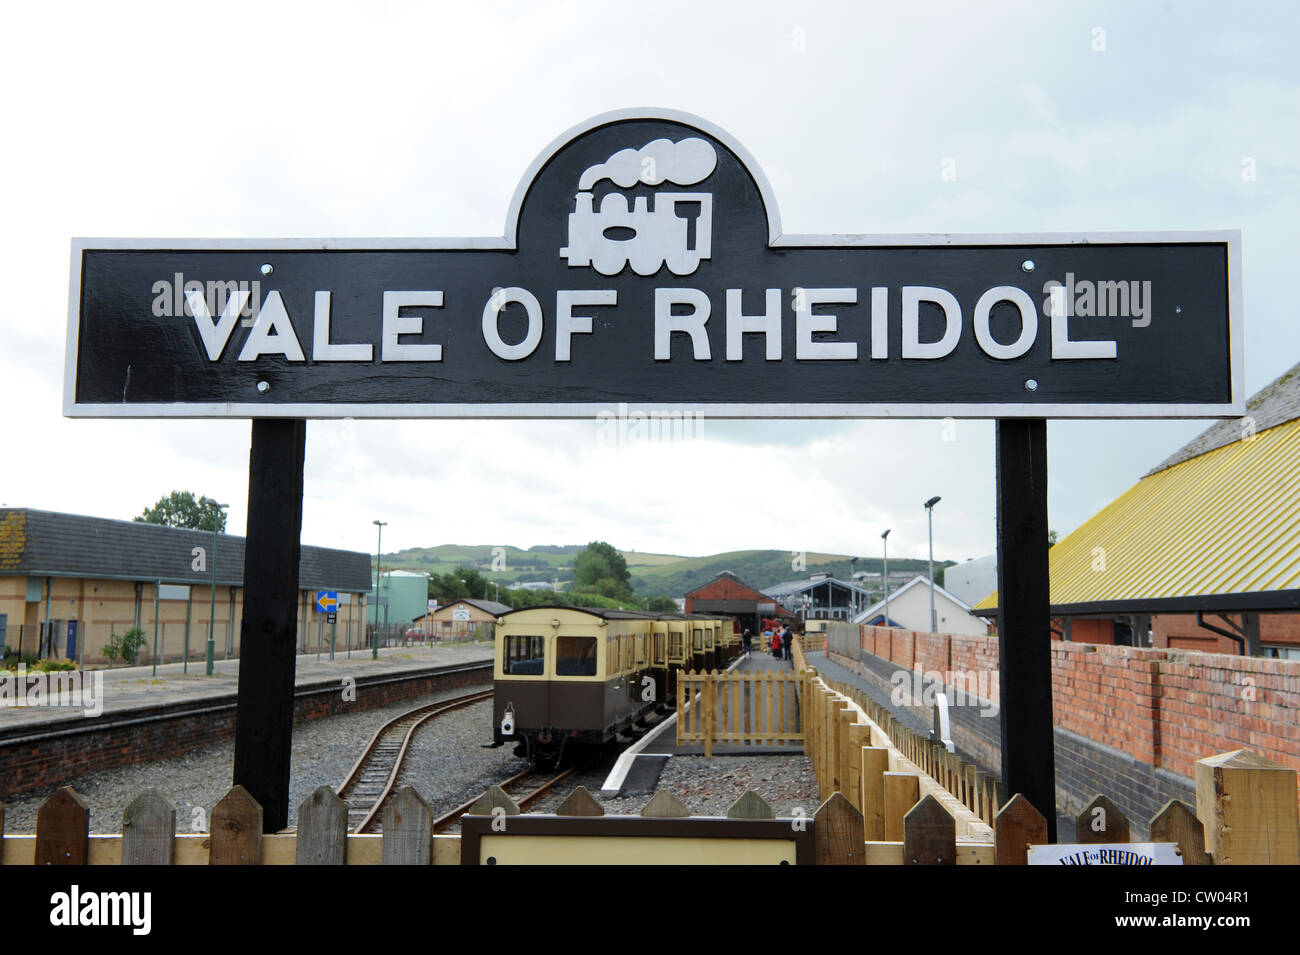 Vale of Rheidol railway station at Aberystwyth Wales Uk Stock Photo